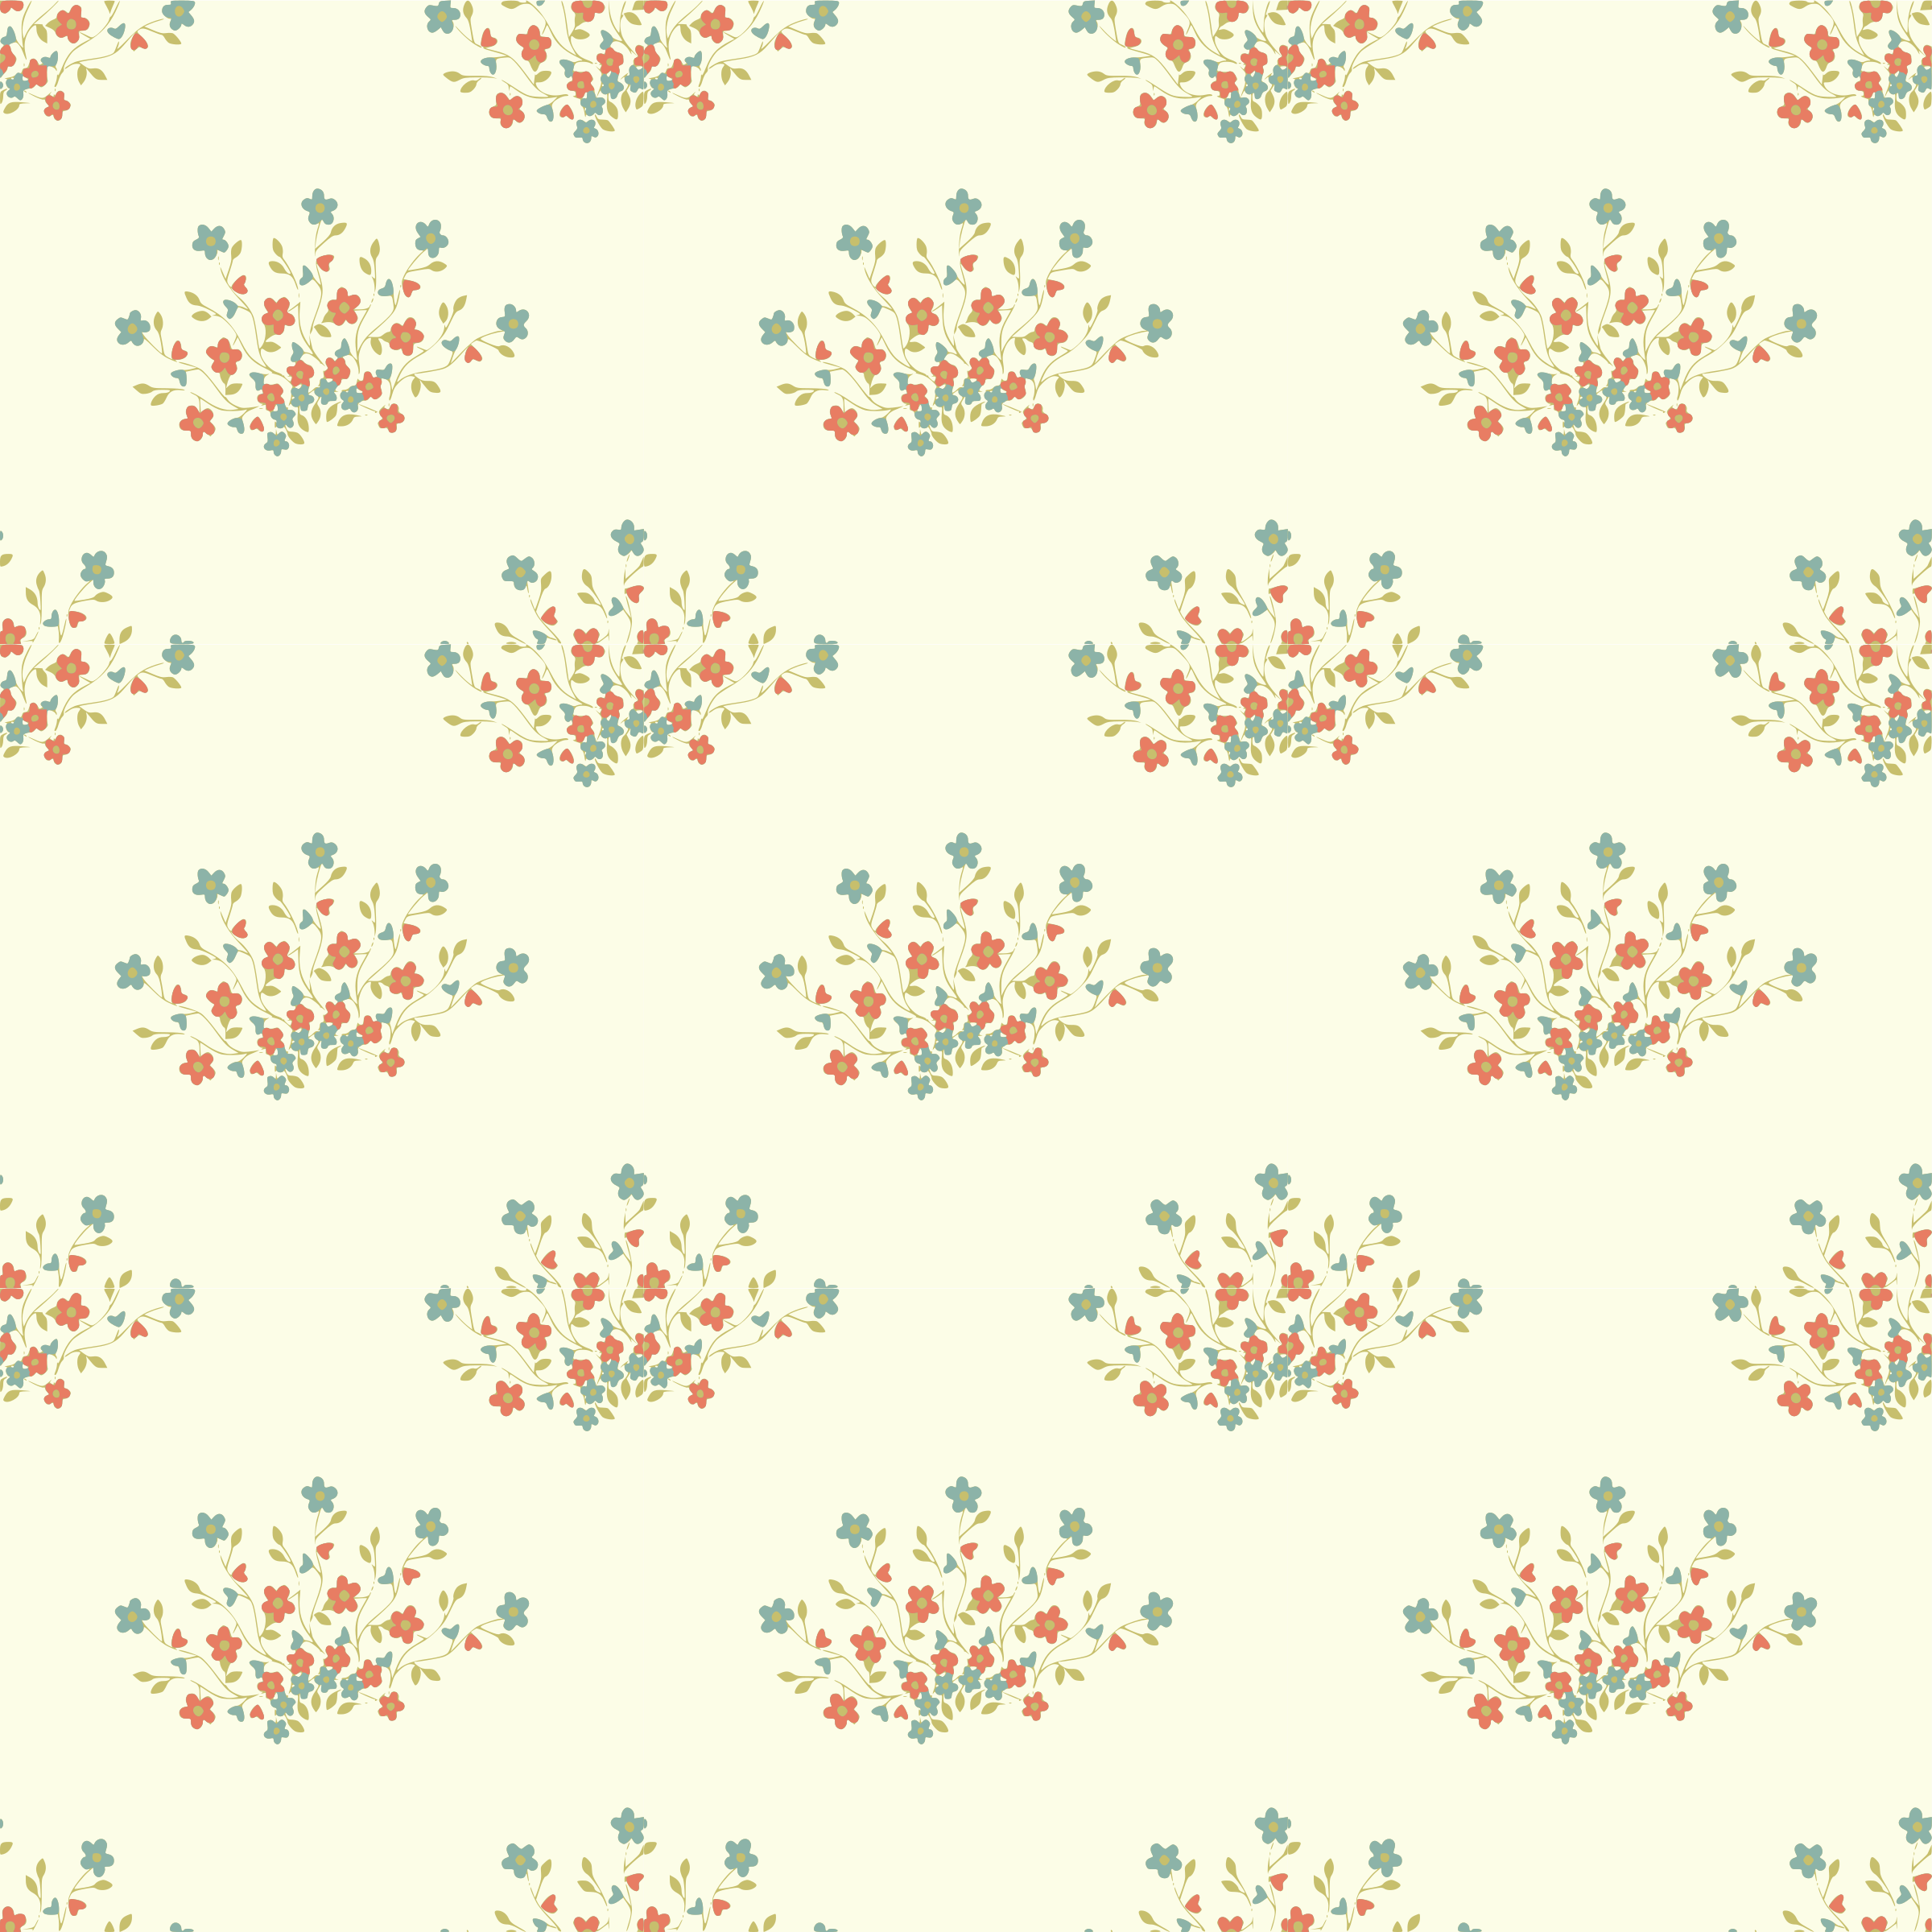 Flower Seamless Pattern By Yamachem